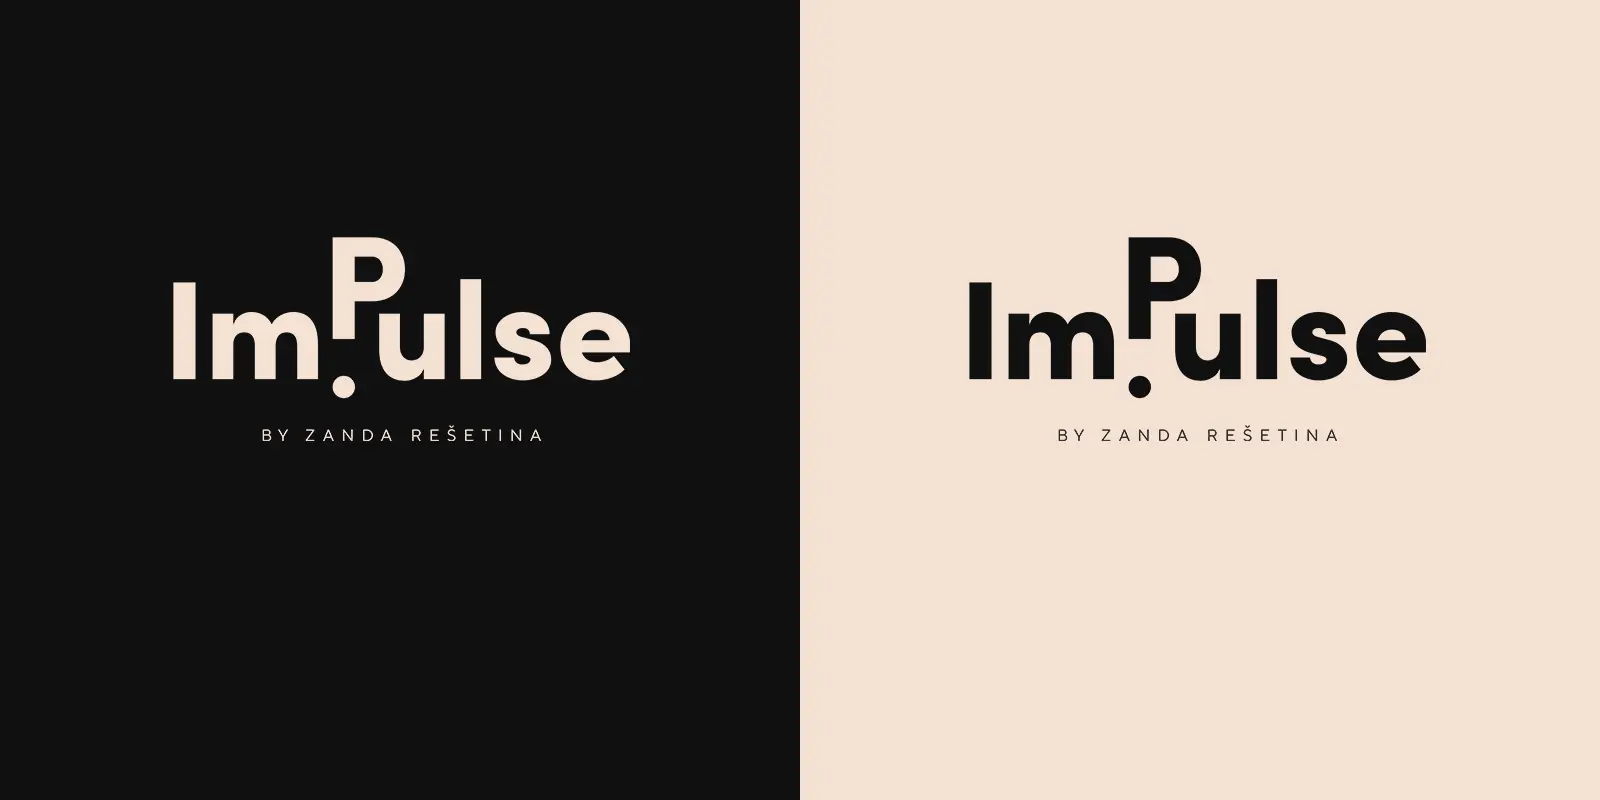 Corporate identity and logo design logo variations